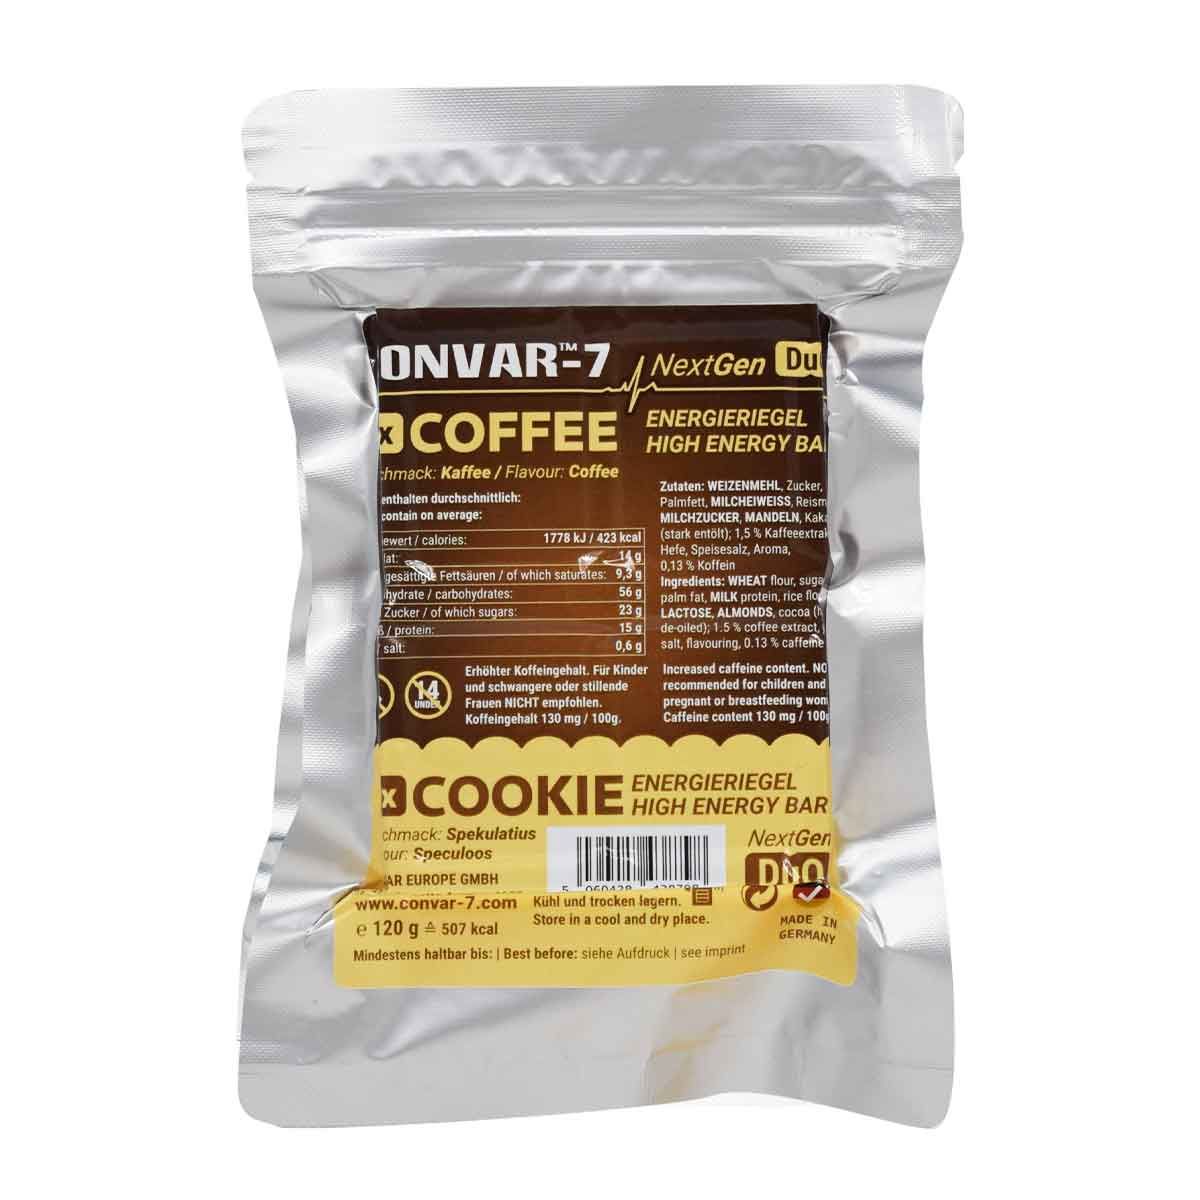 Emergency biscuit - Cookie, coffee - 10 years